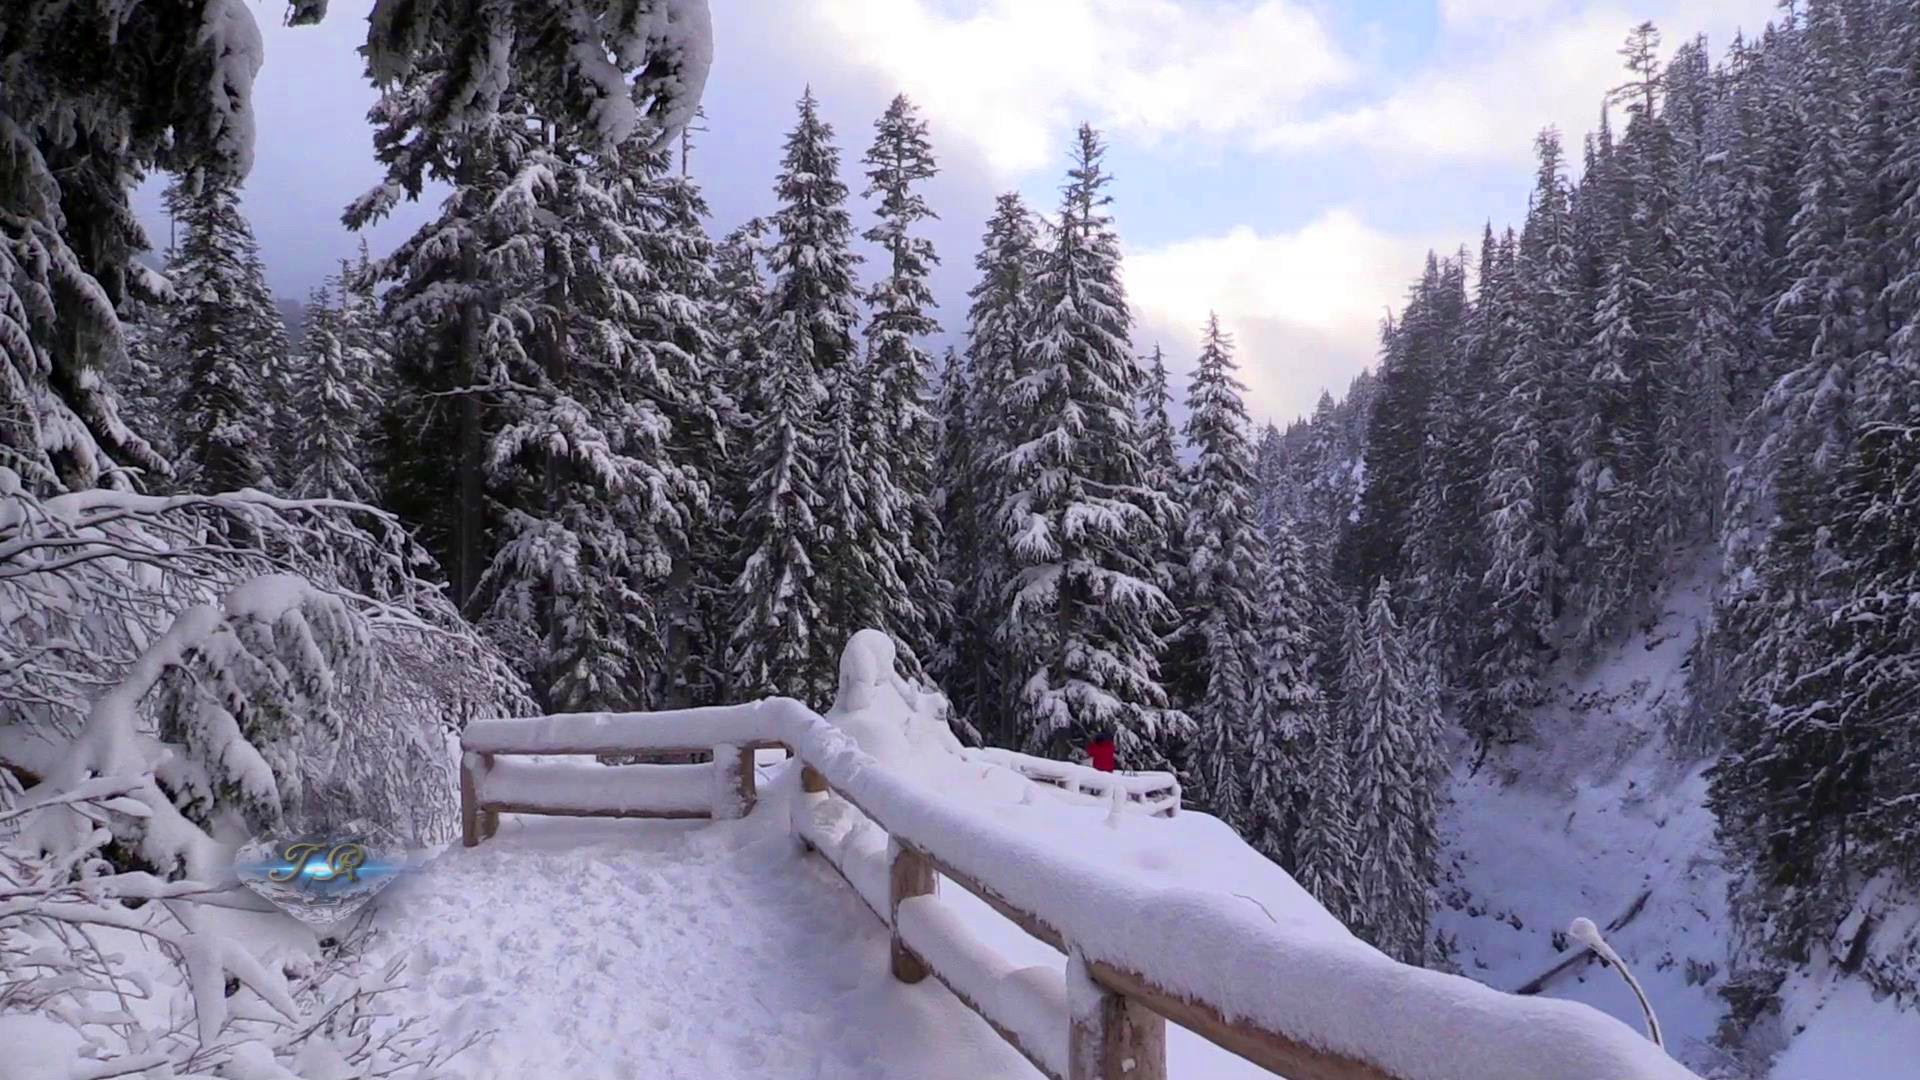 Winter at Mt. Rainier National Park 20141230 1080p HD - YouTube